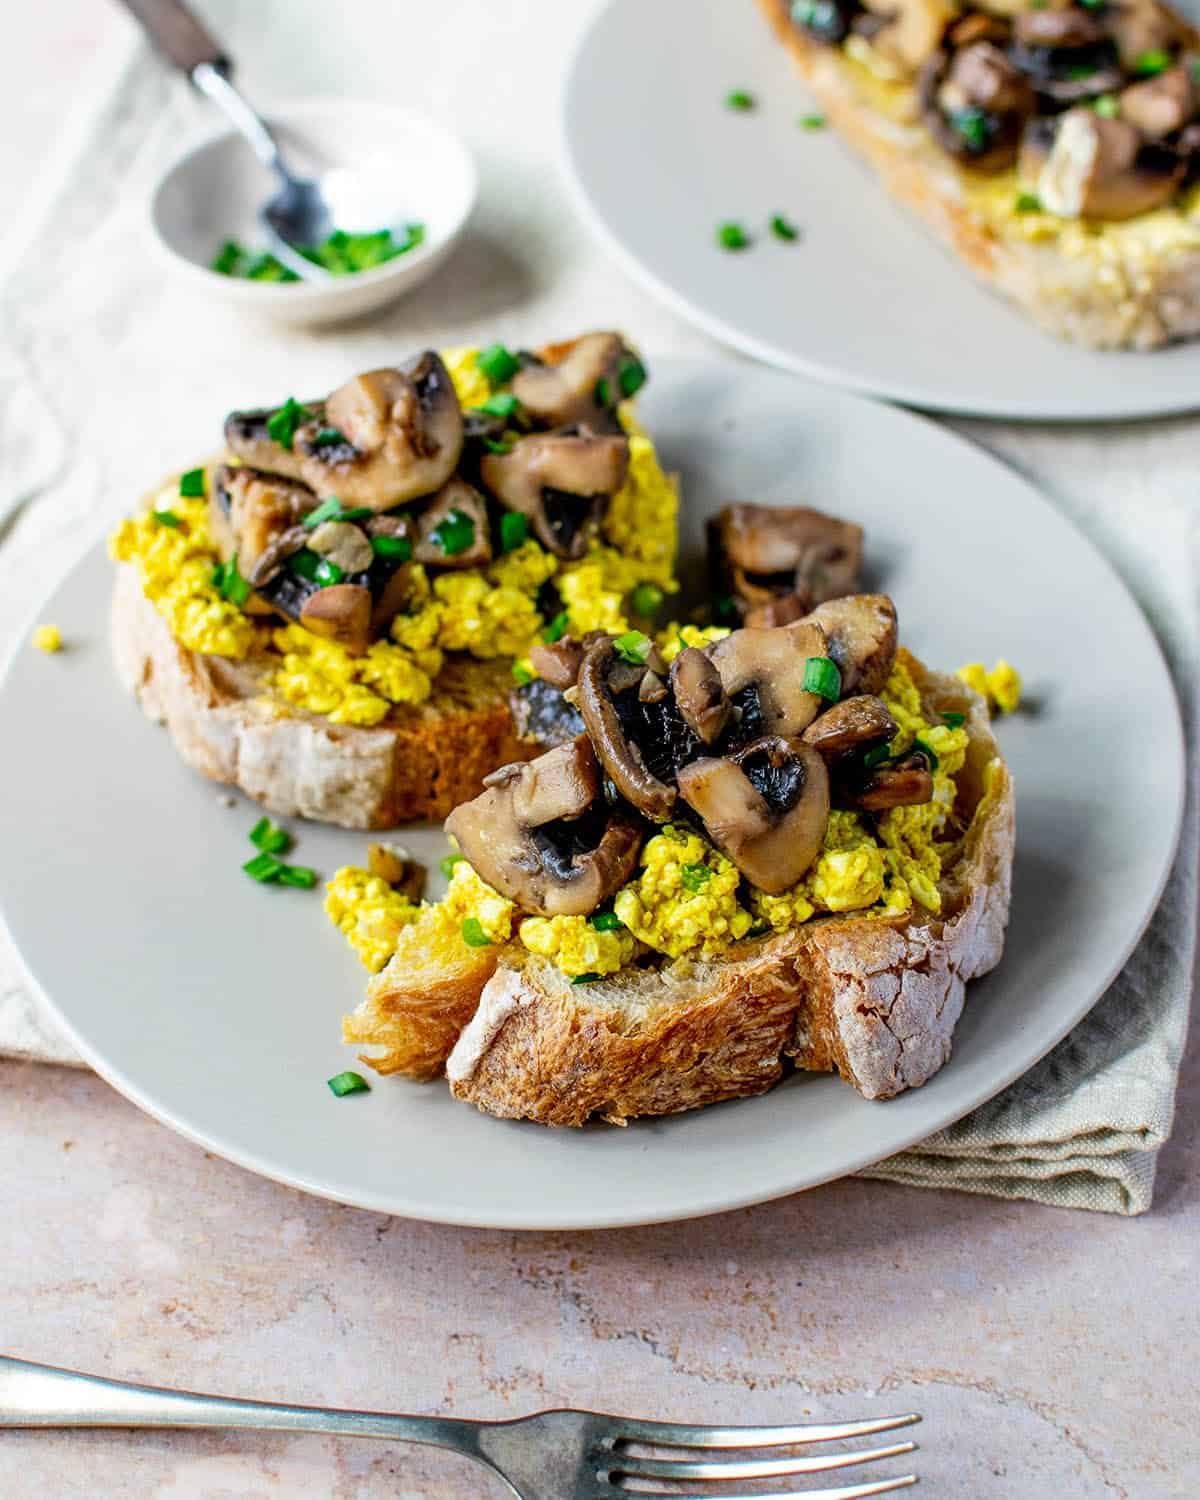 Vegan garlic mushrooms on toast with silken tofu scramble